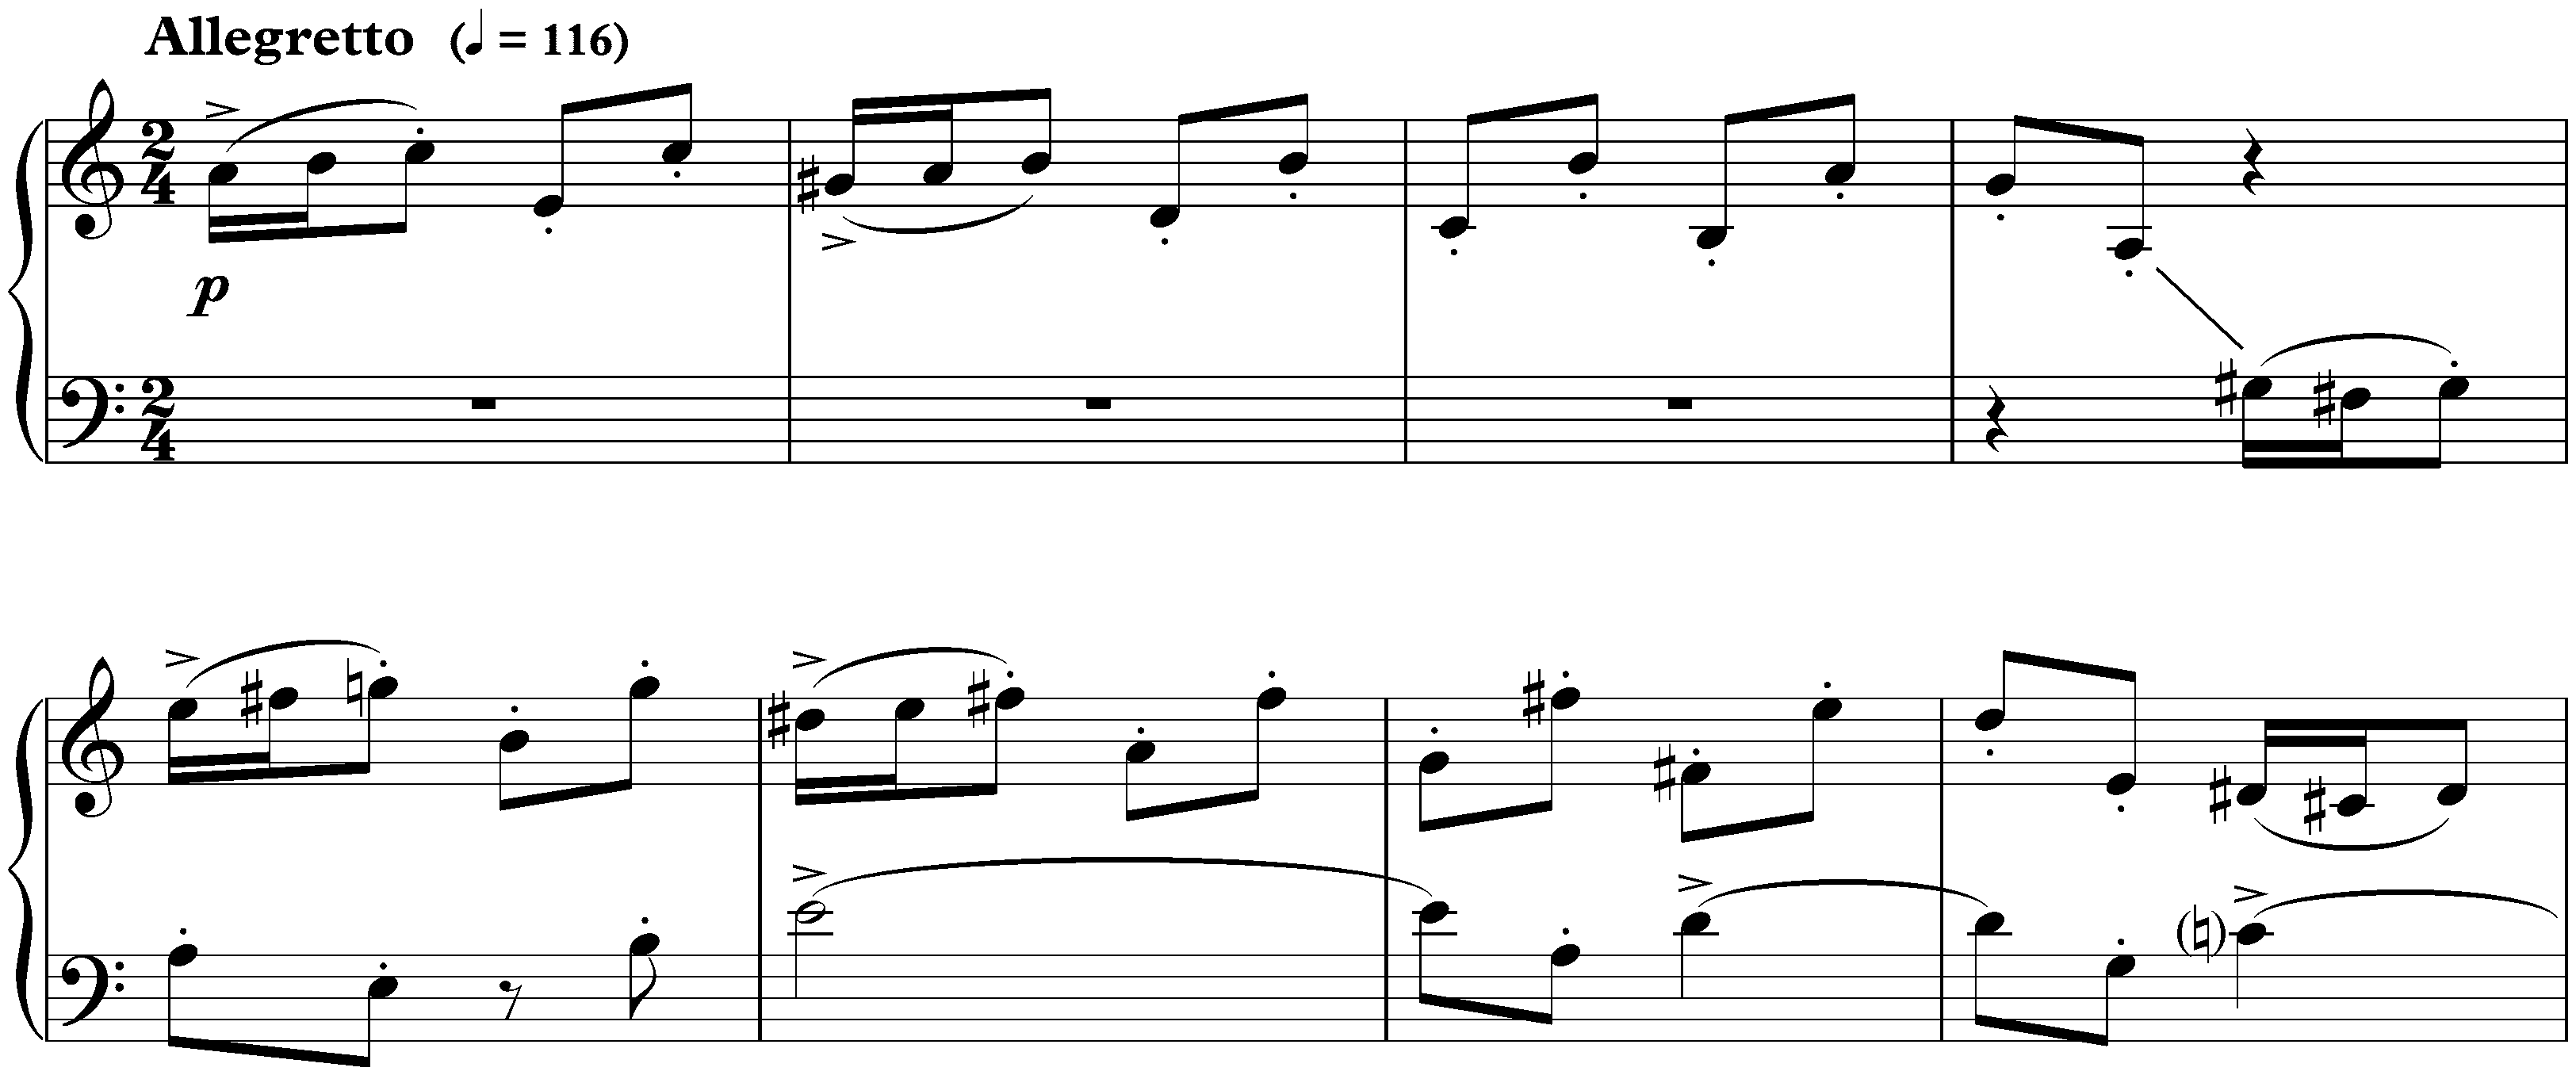 Twenty-four Preludes and Fugues, op. 87; 2. A minor, Fugue